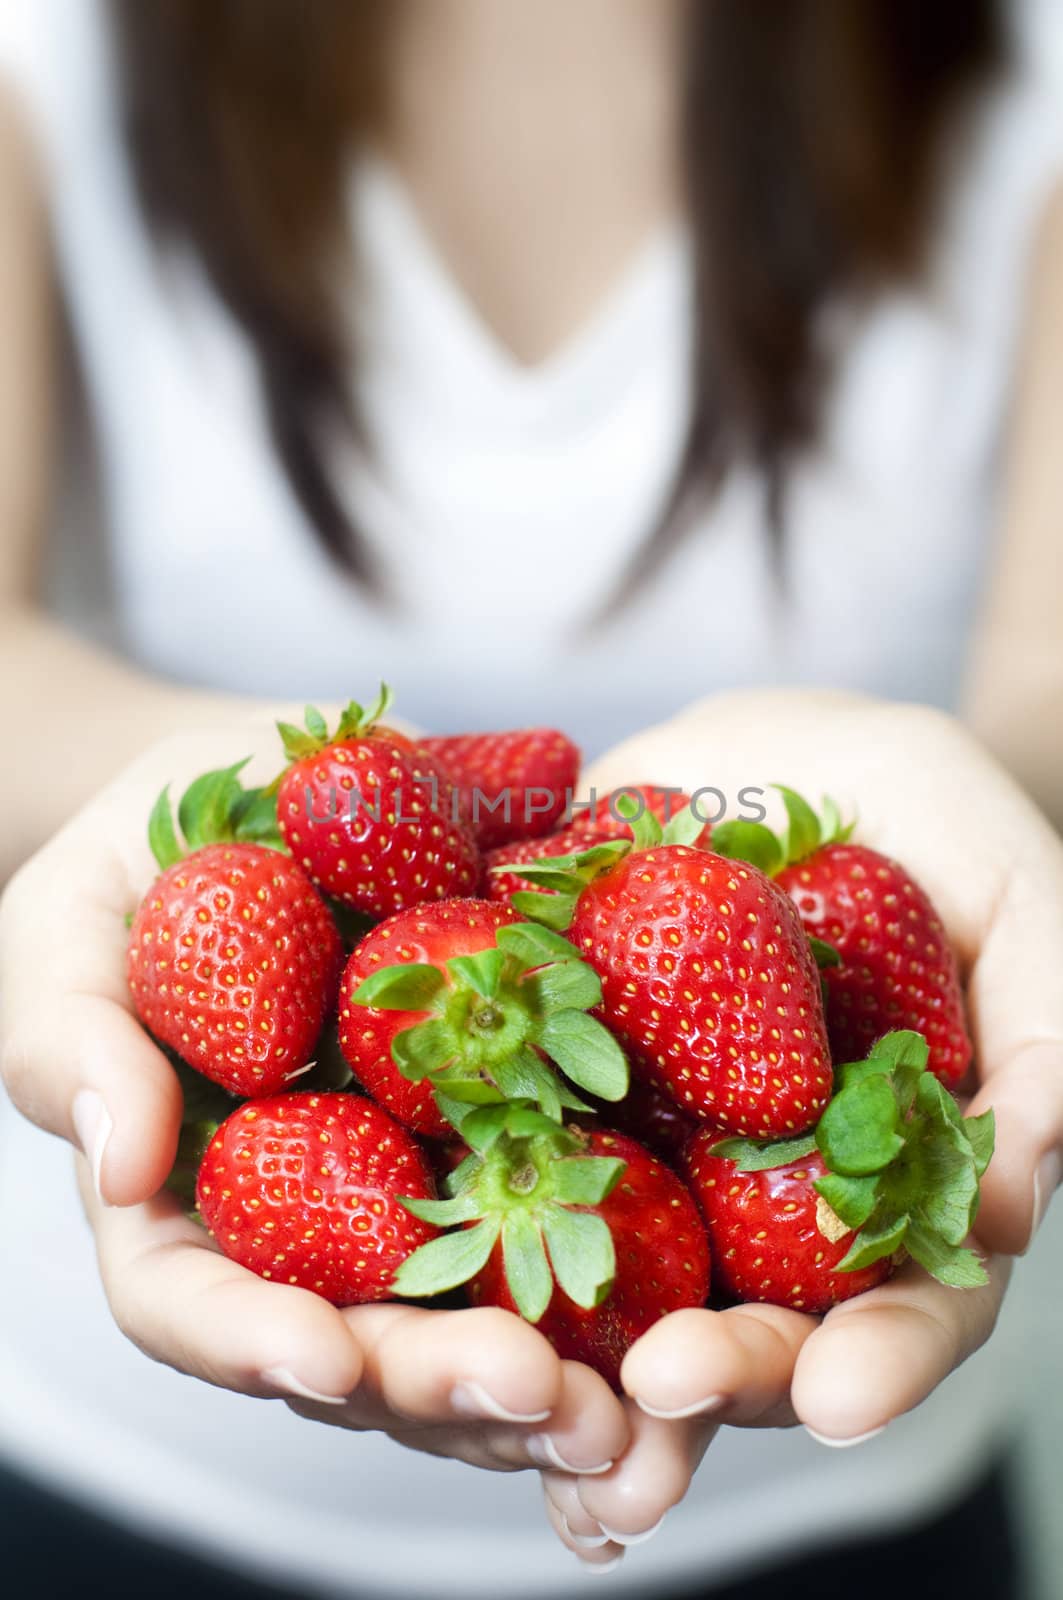 Many fresh strawberries on hand.